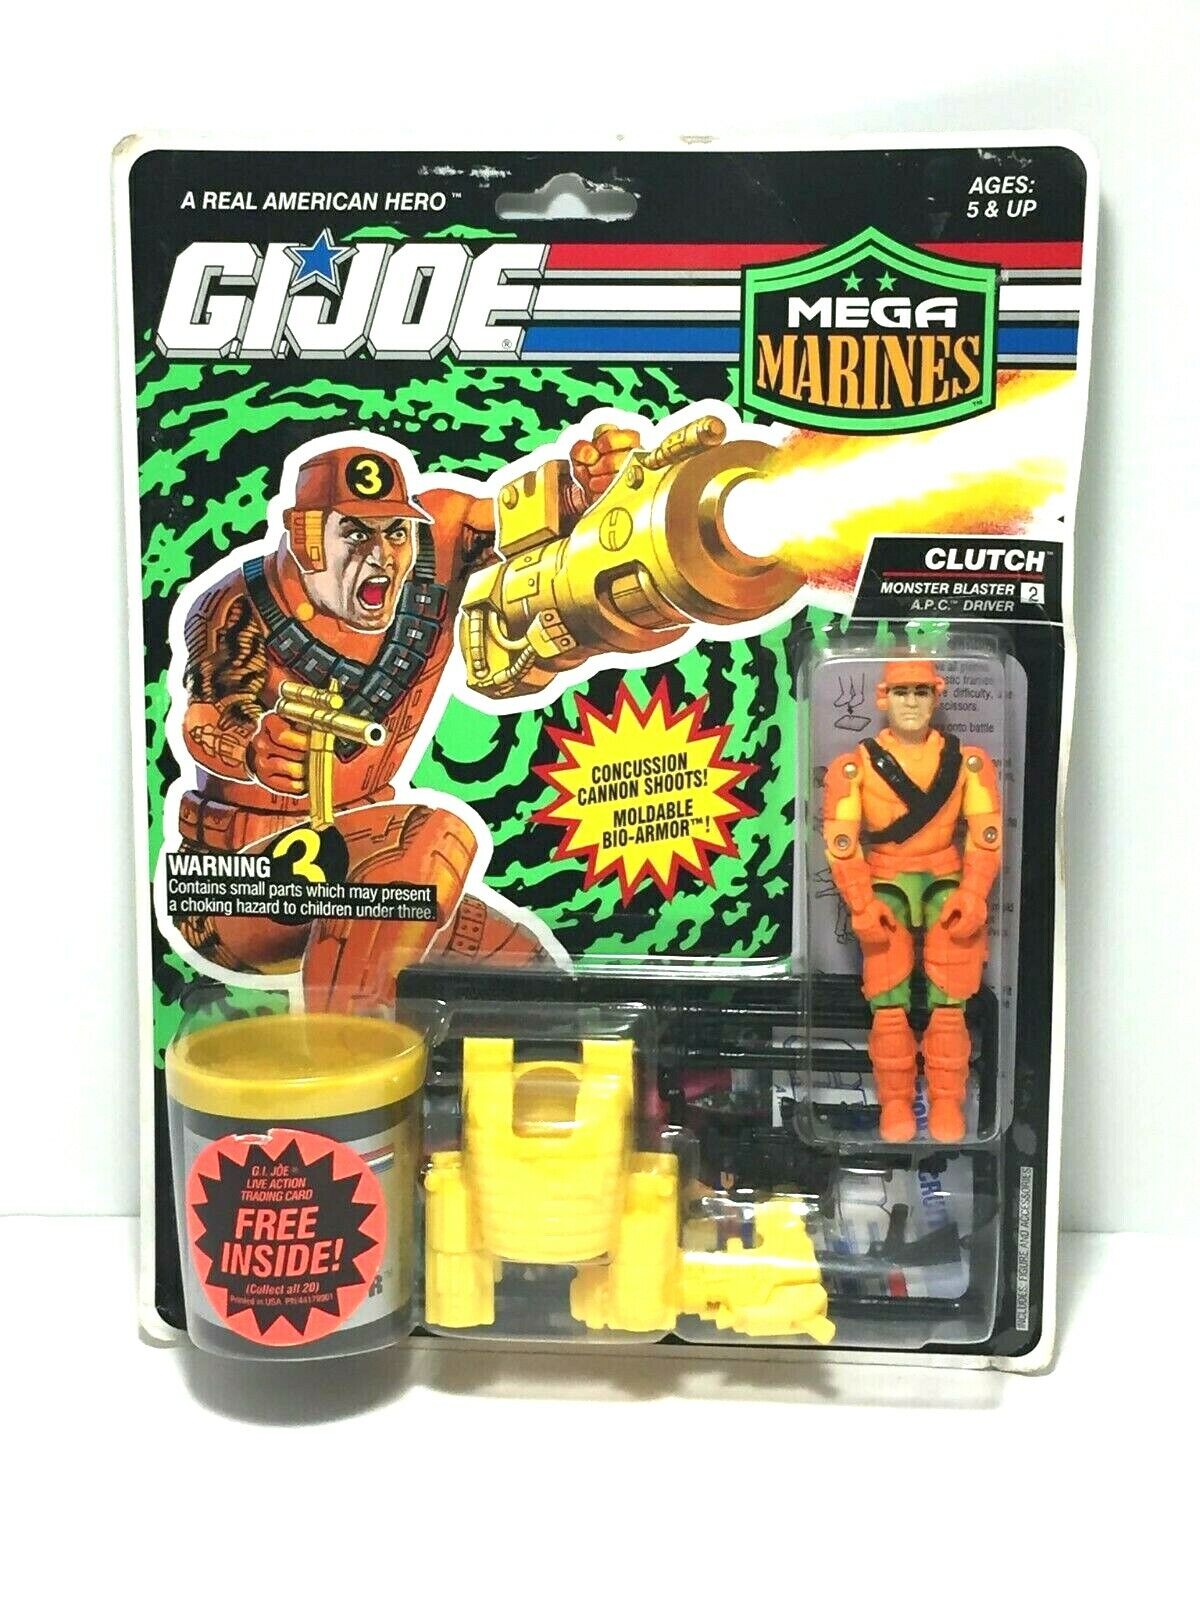 1992 GI Joe Mega Marines Clutch Figure and Accessories New In The Package